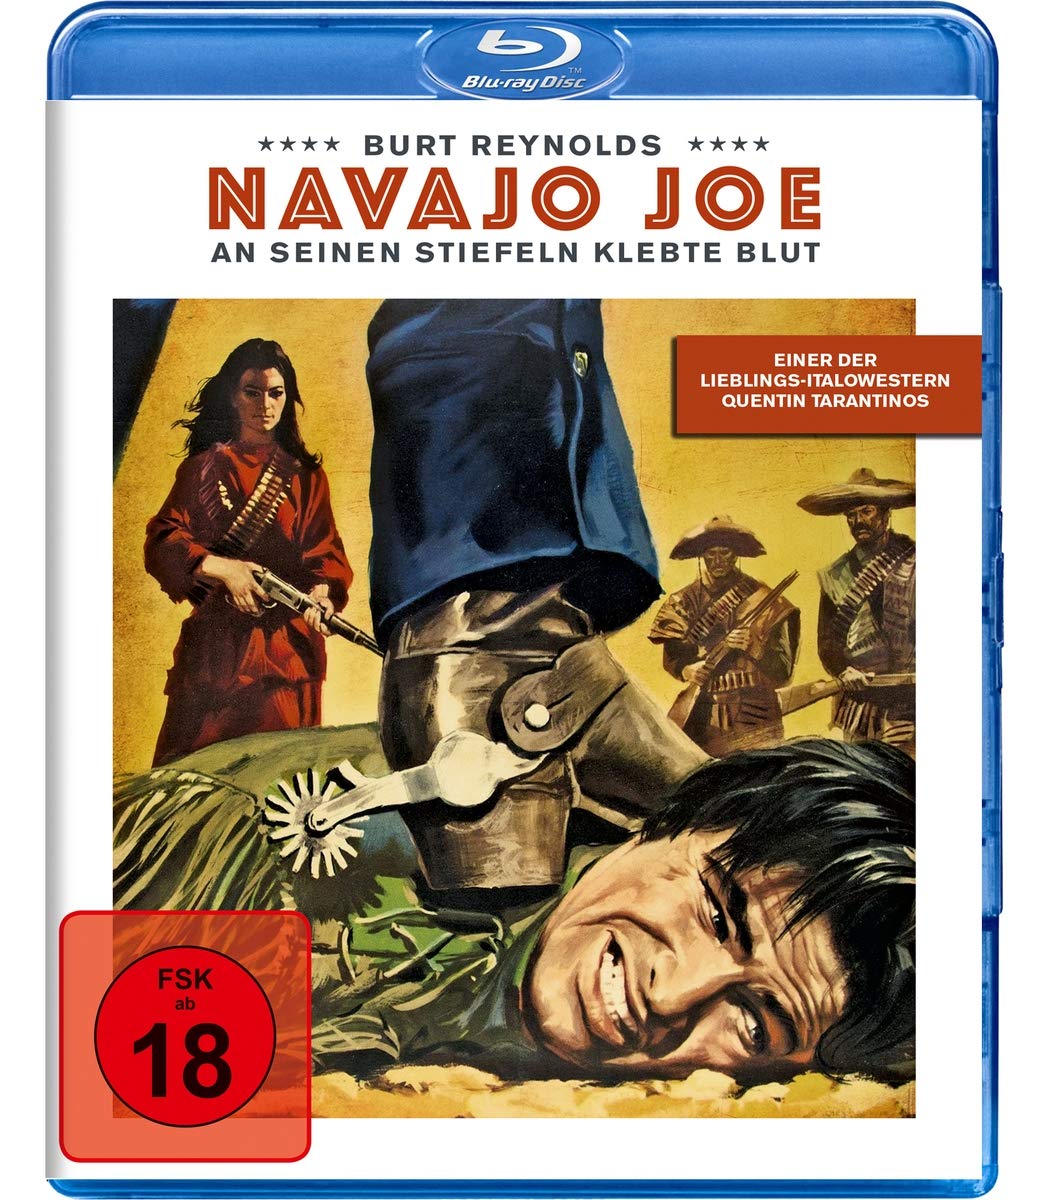 Navajo Joe - An seinen Stiefeln klebte Blut [Blu-ray]